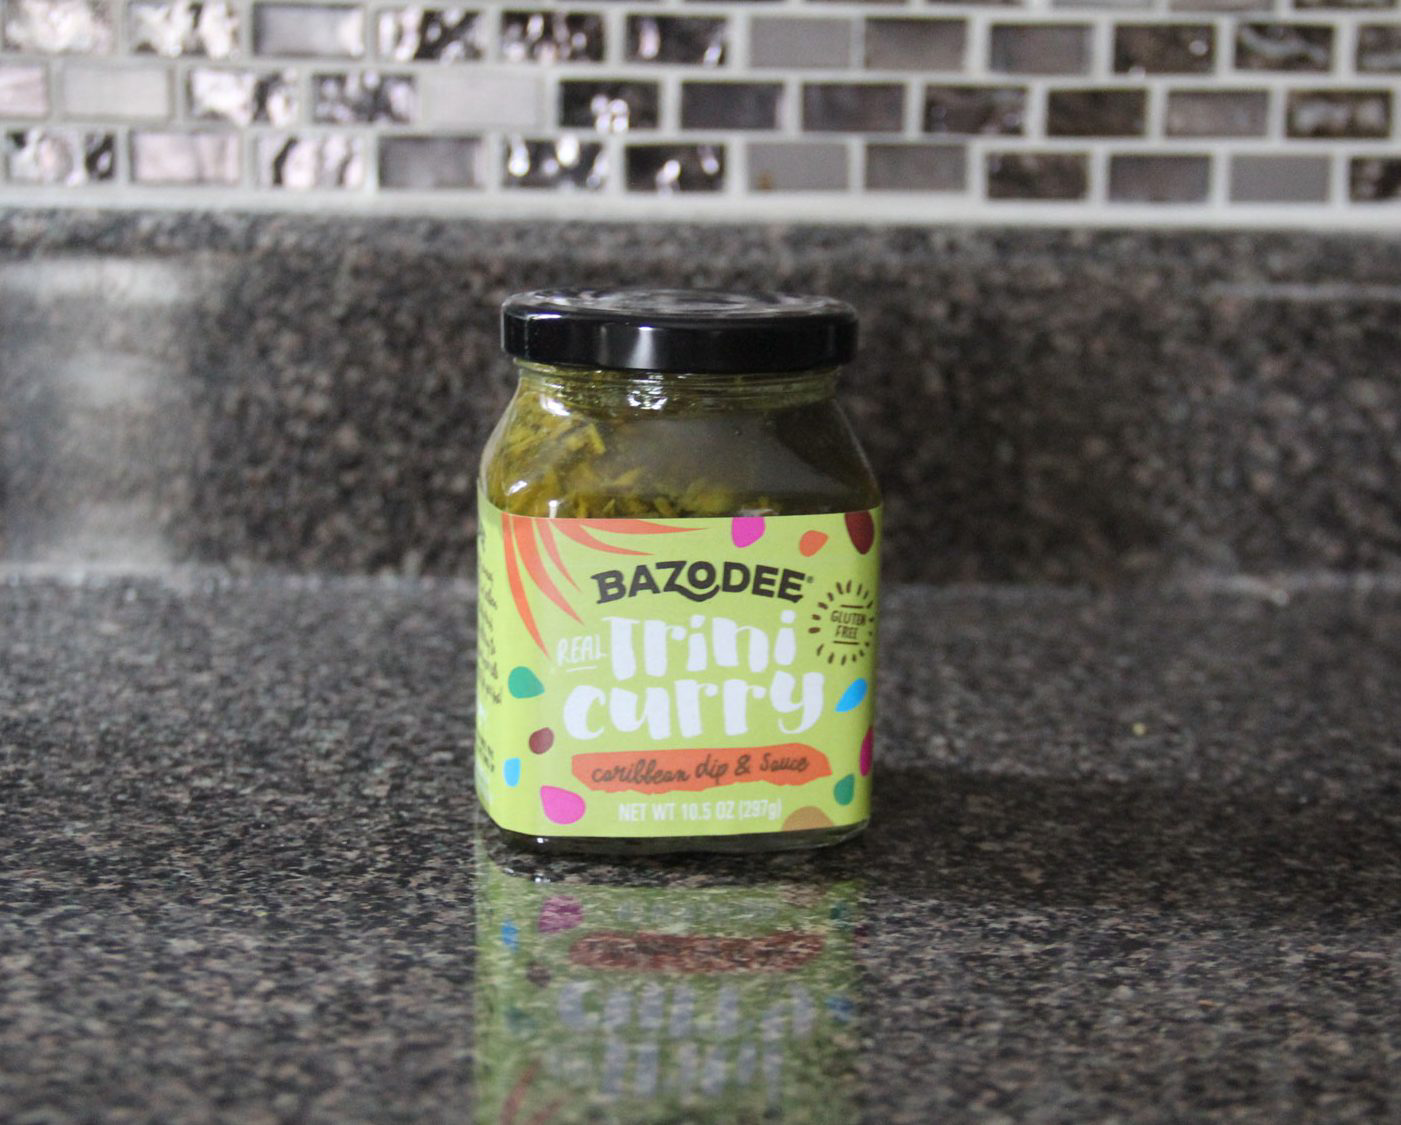 A full jar of Bazodee Caribbean dip and sauce.